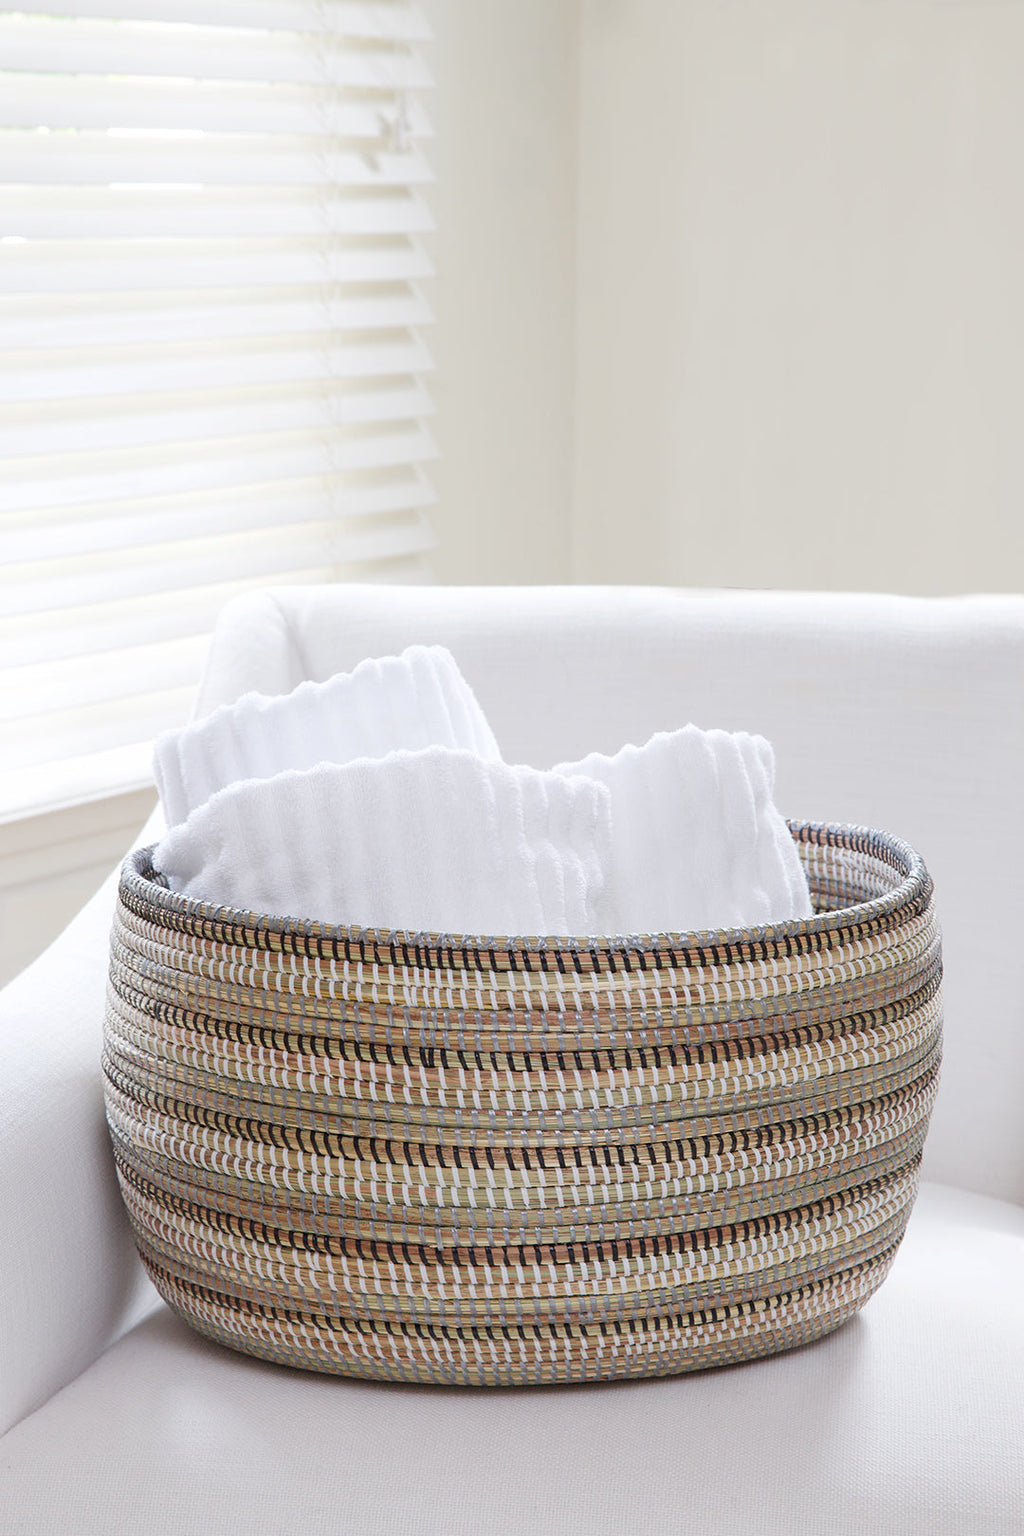 Black, Silver & White Striped Knitting Basket Swahili, Image